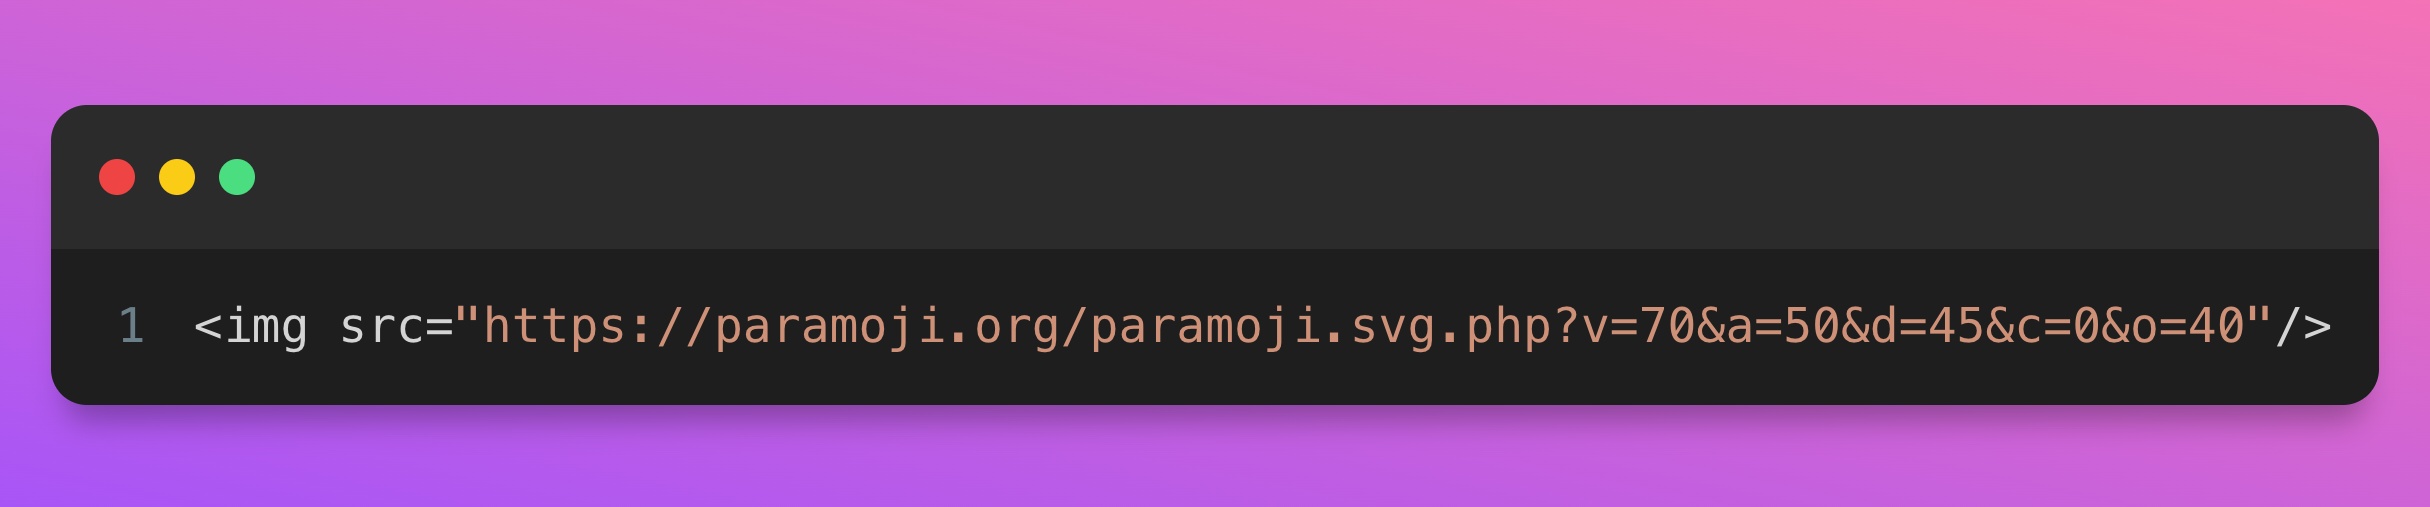 Paramoji - A parametric emoji